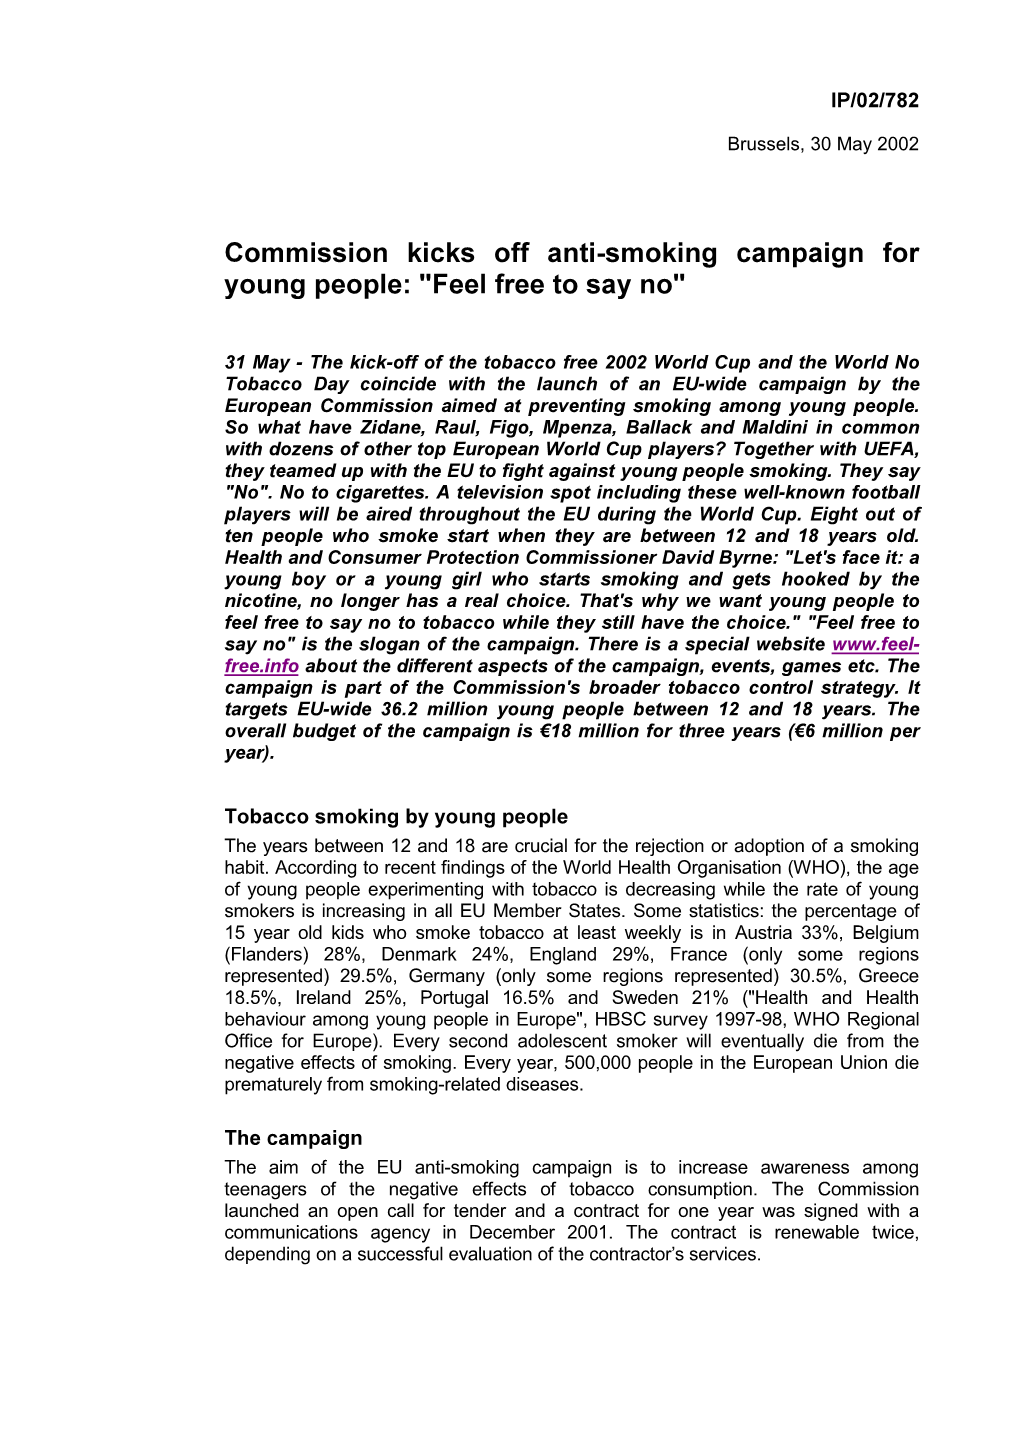 Commission Kicks Off Anti Smoking Campaign